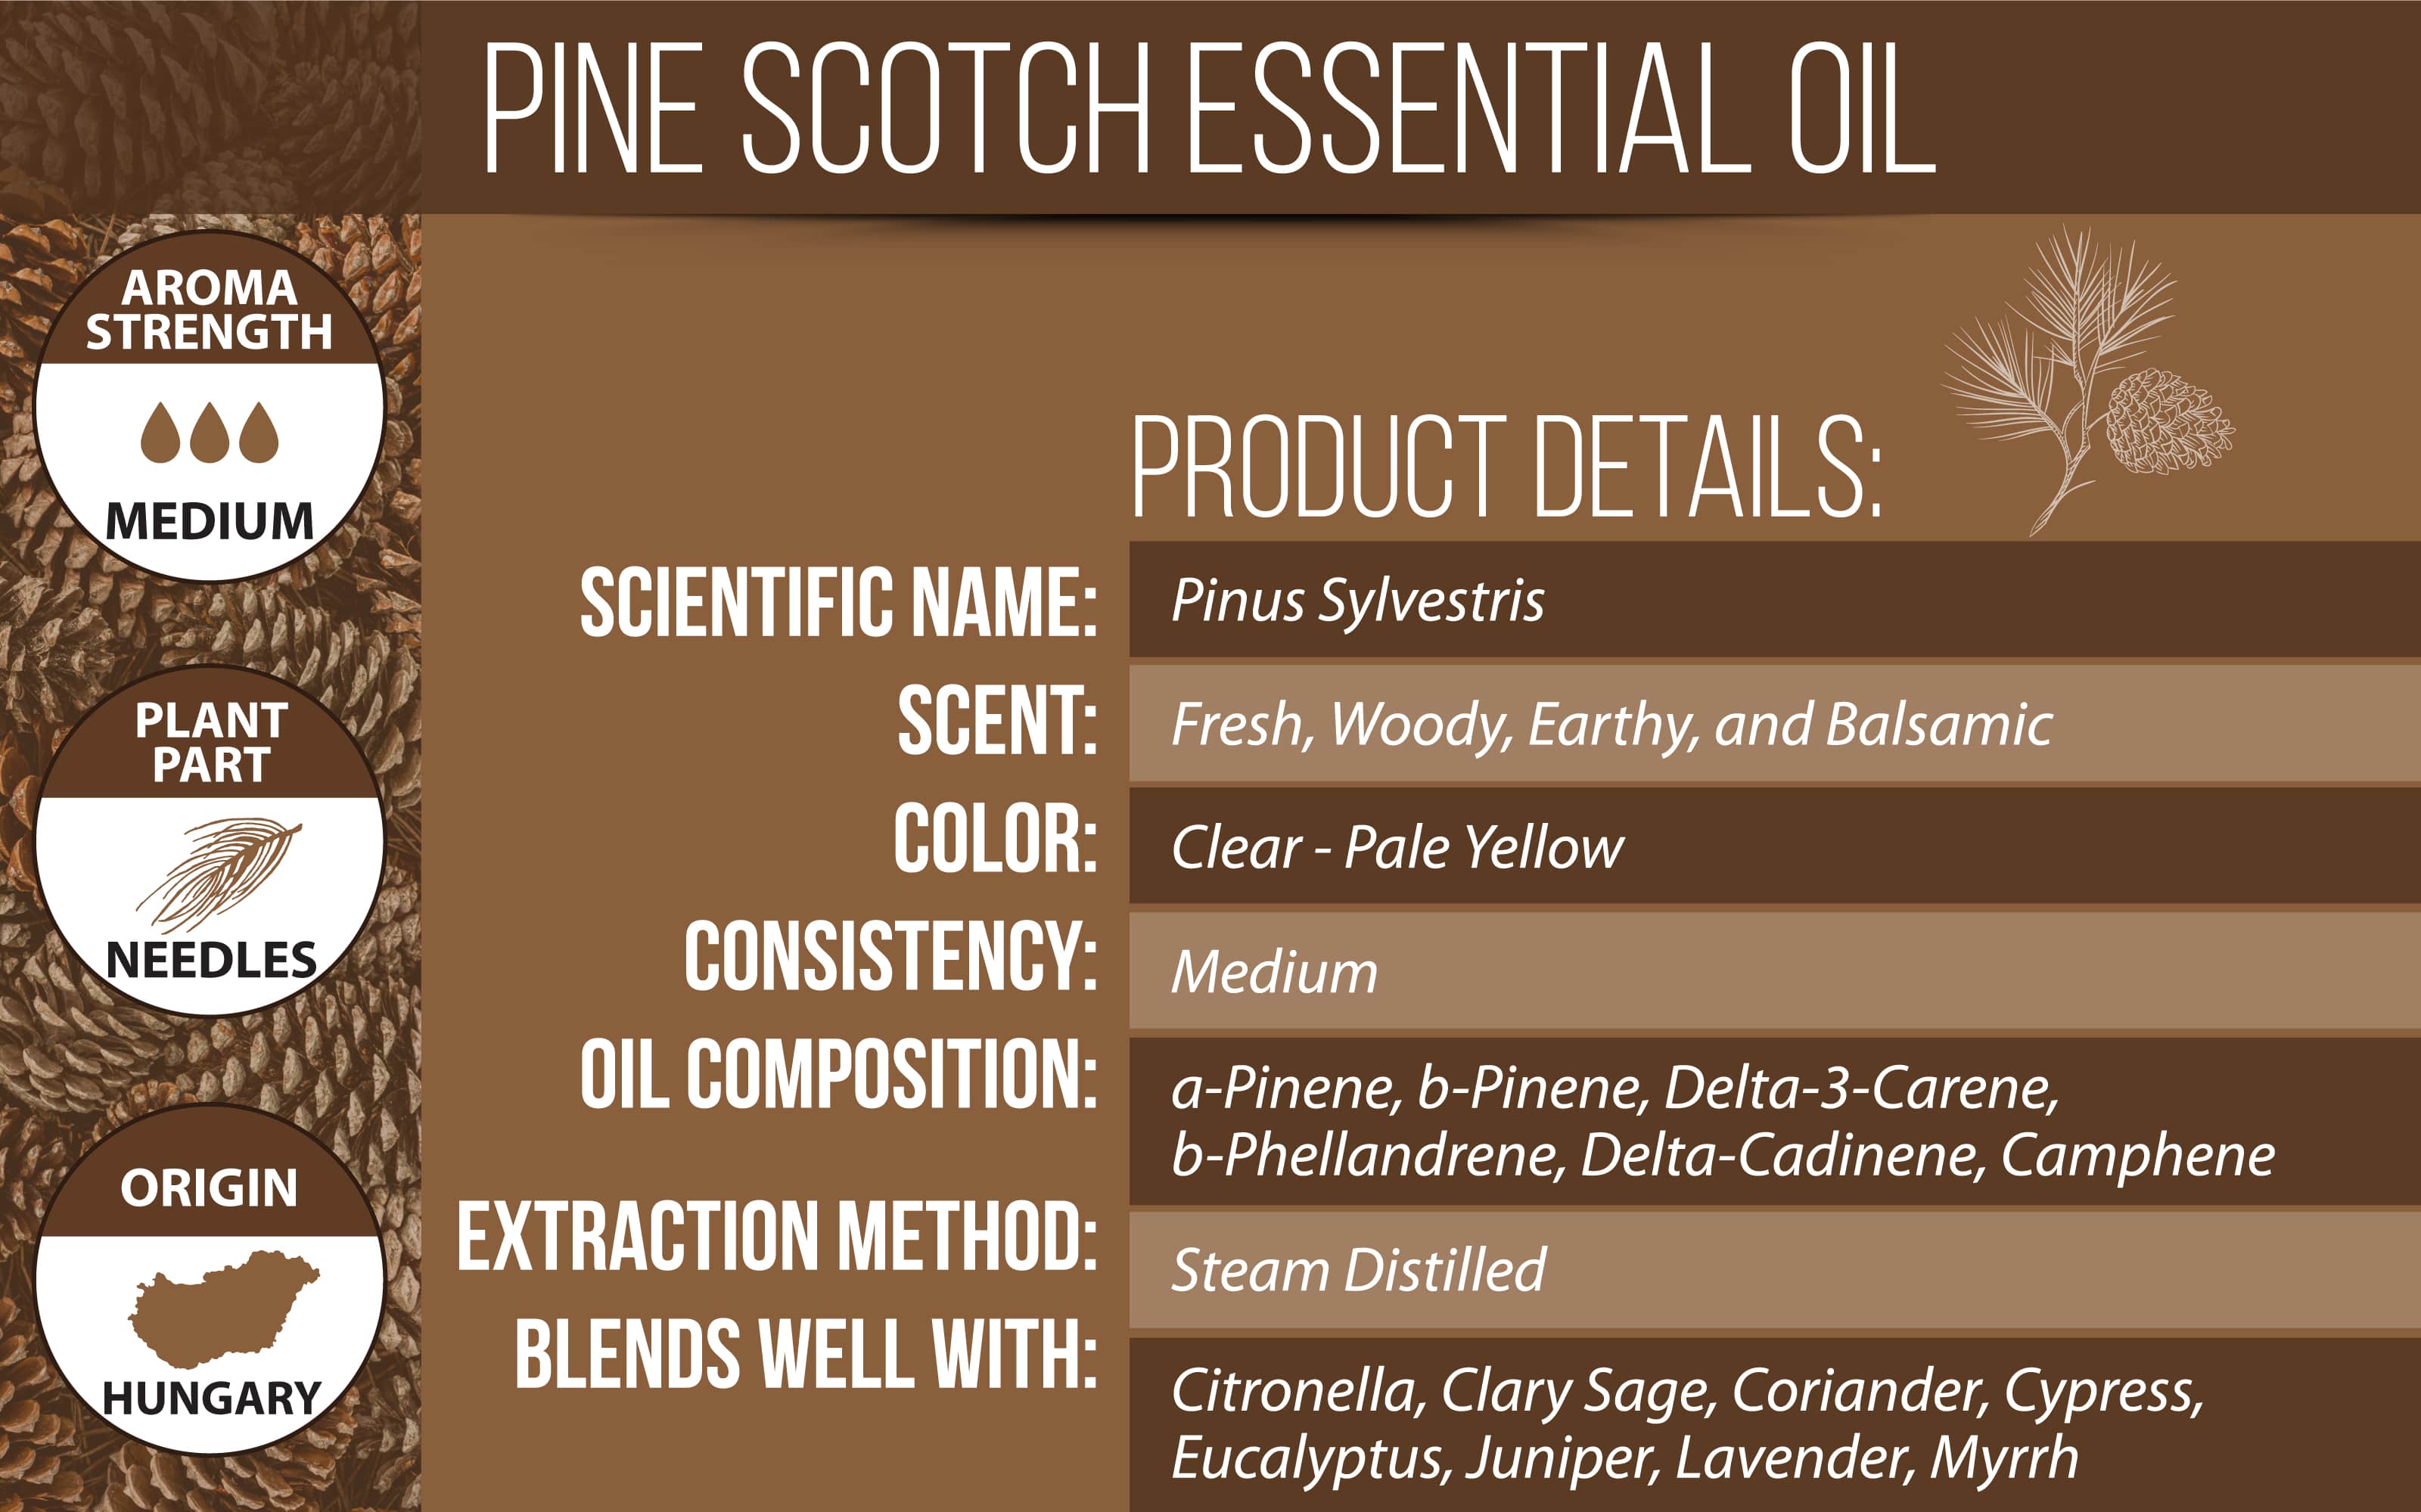 Scotch Pine Essential Oil Product Details